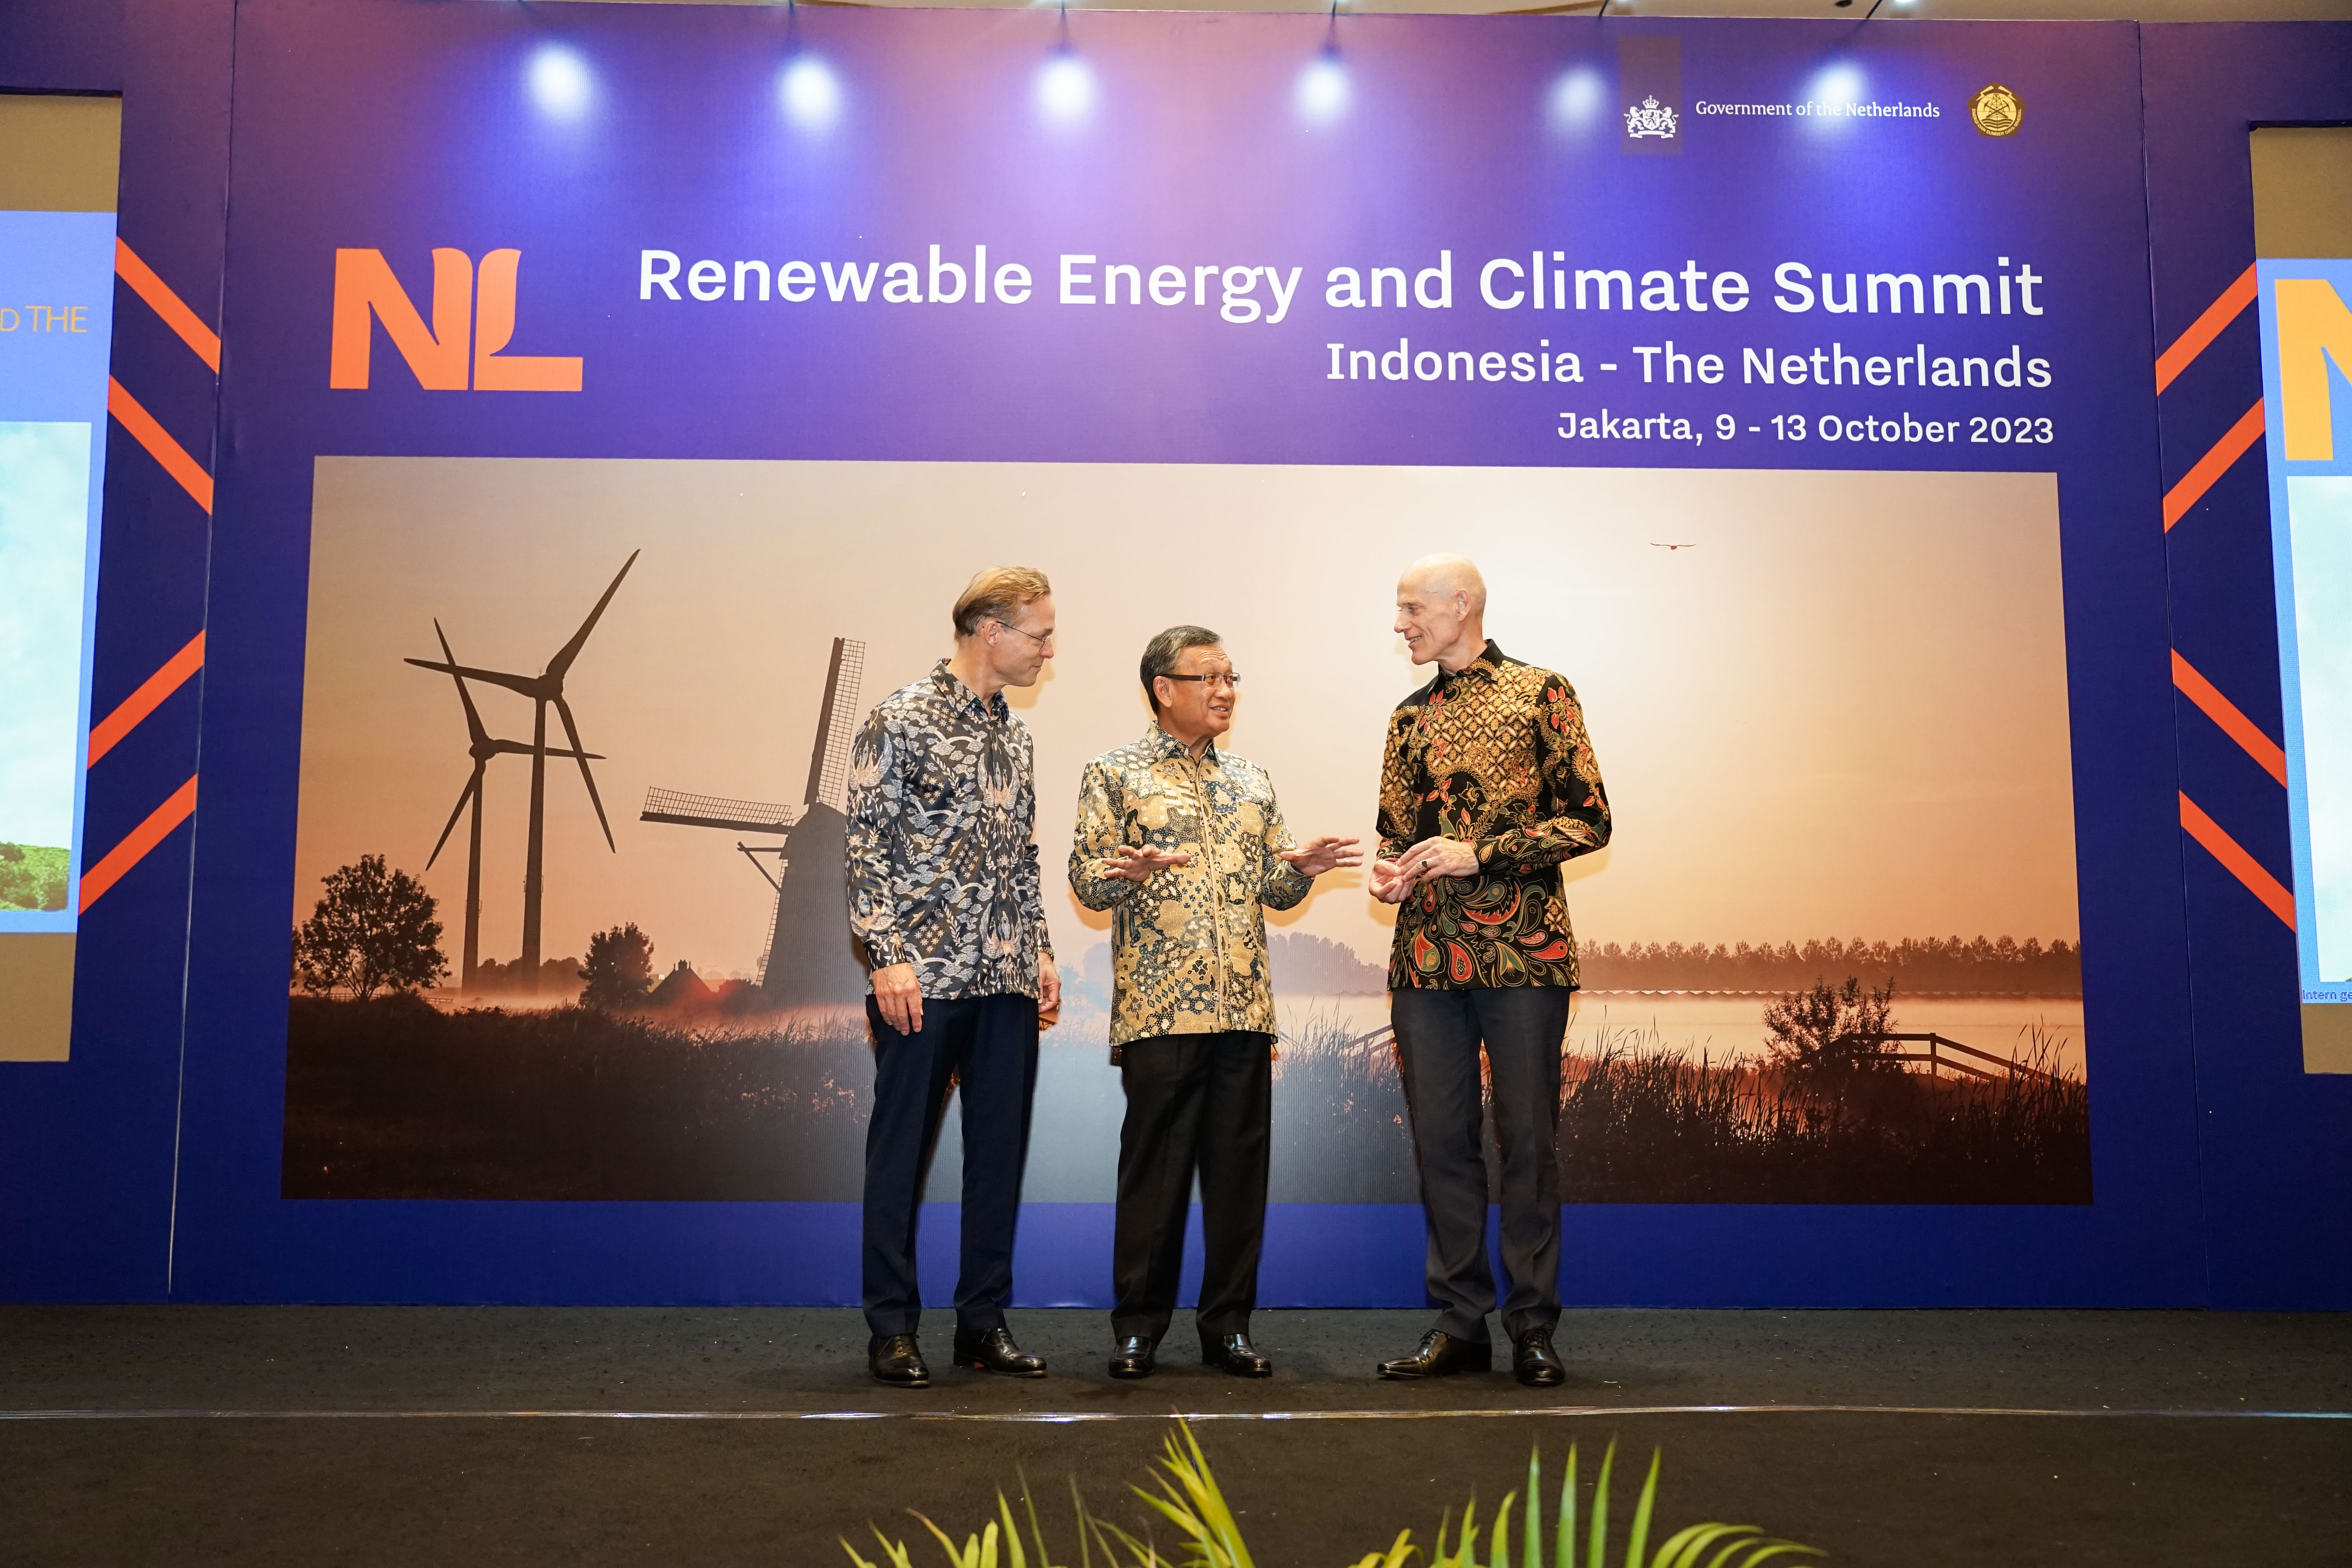 H.R.H. Prince Jaime de Bourbon de Parme, H.E. Minister Arifin Tasrif, and H.E. Ambassador Lambert Grijns at the opening of "Renewable Energy and Climate Summit Indonesia-the Netherlands 2023".